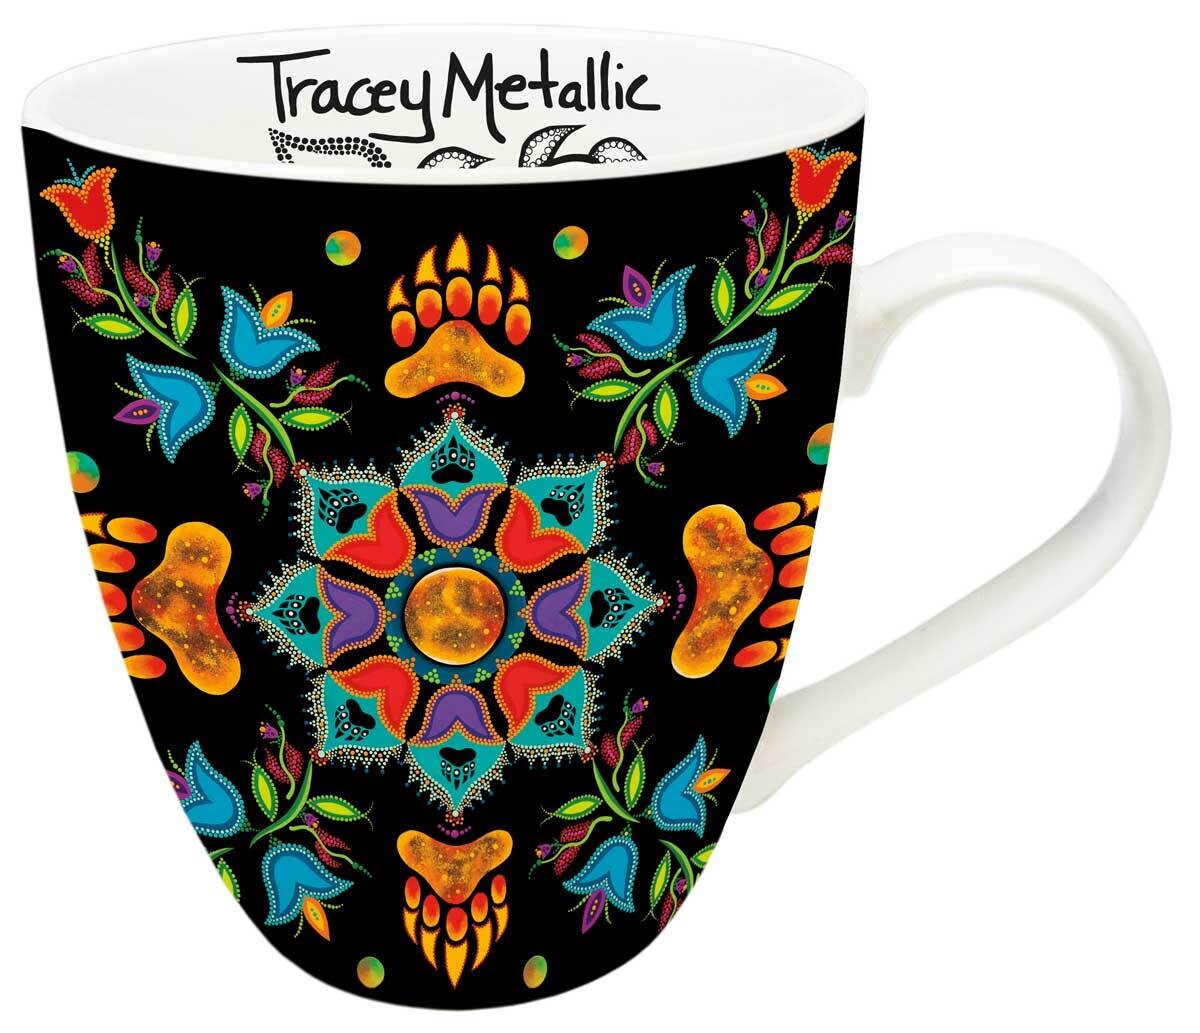 Tracey Metallic- Revelation Mug